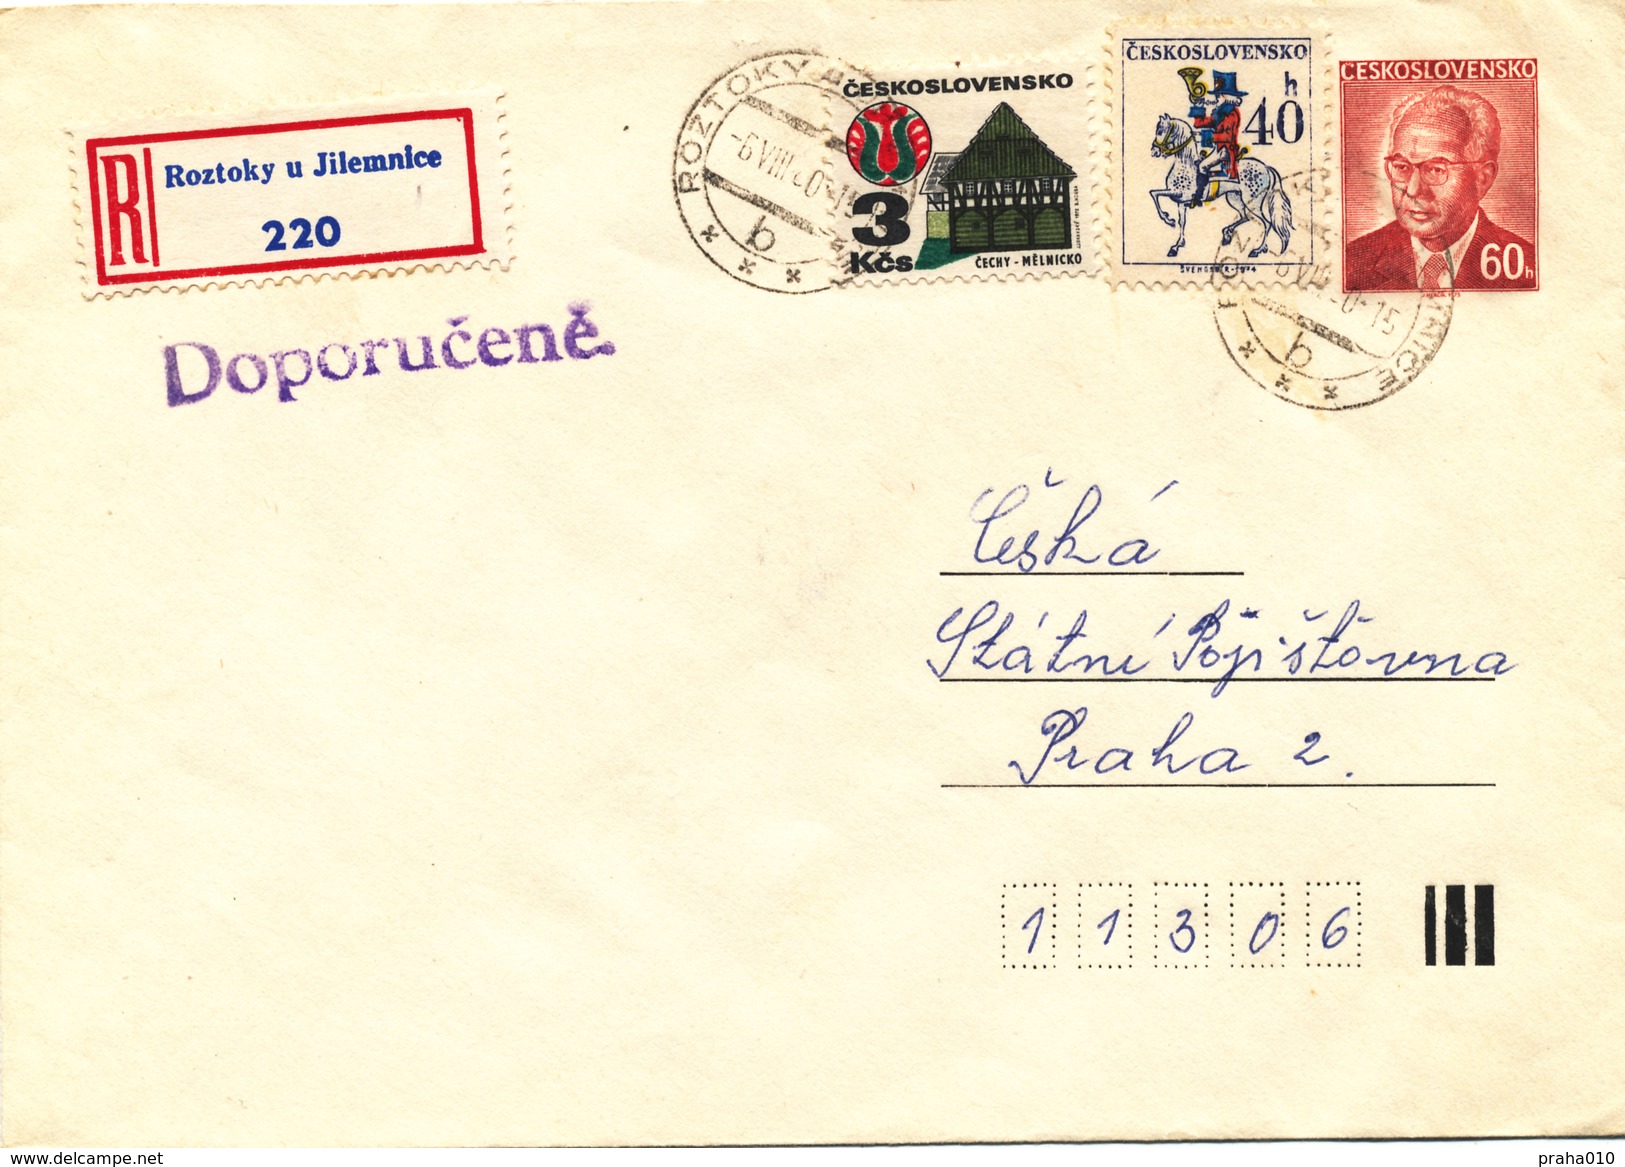 L3503 - Czechoslovakia (1980) Roztoky U Jilemnice (Postal Stationery) R-letter; Tariff: 4,00 Kcs - Sobres